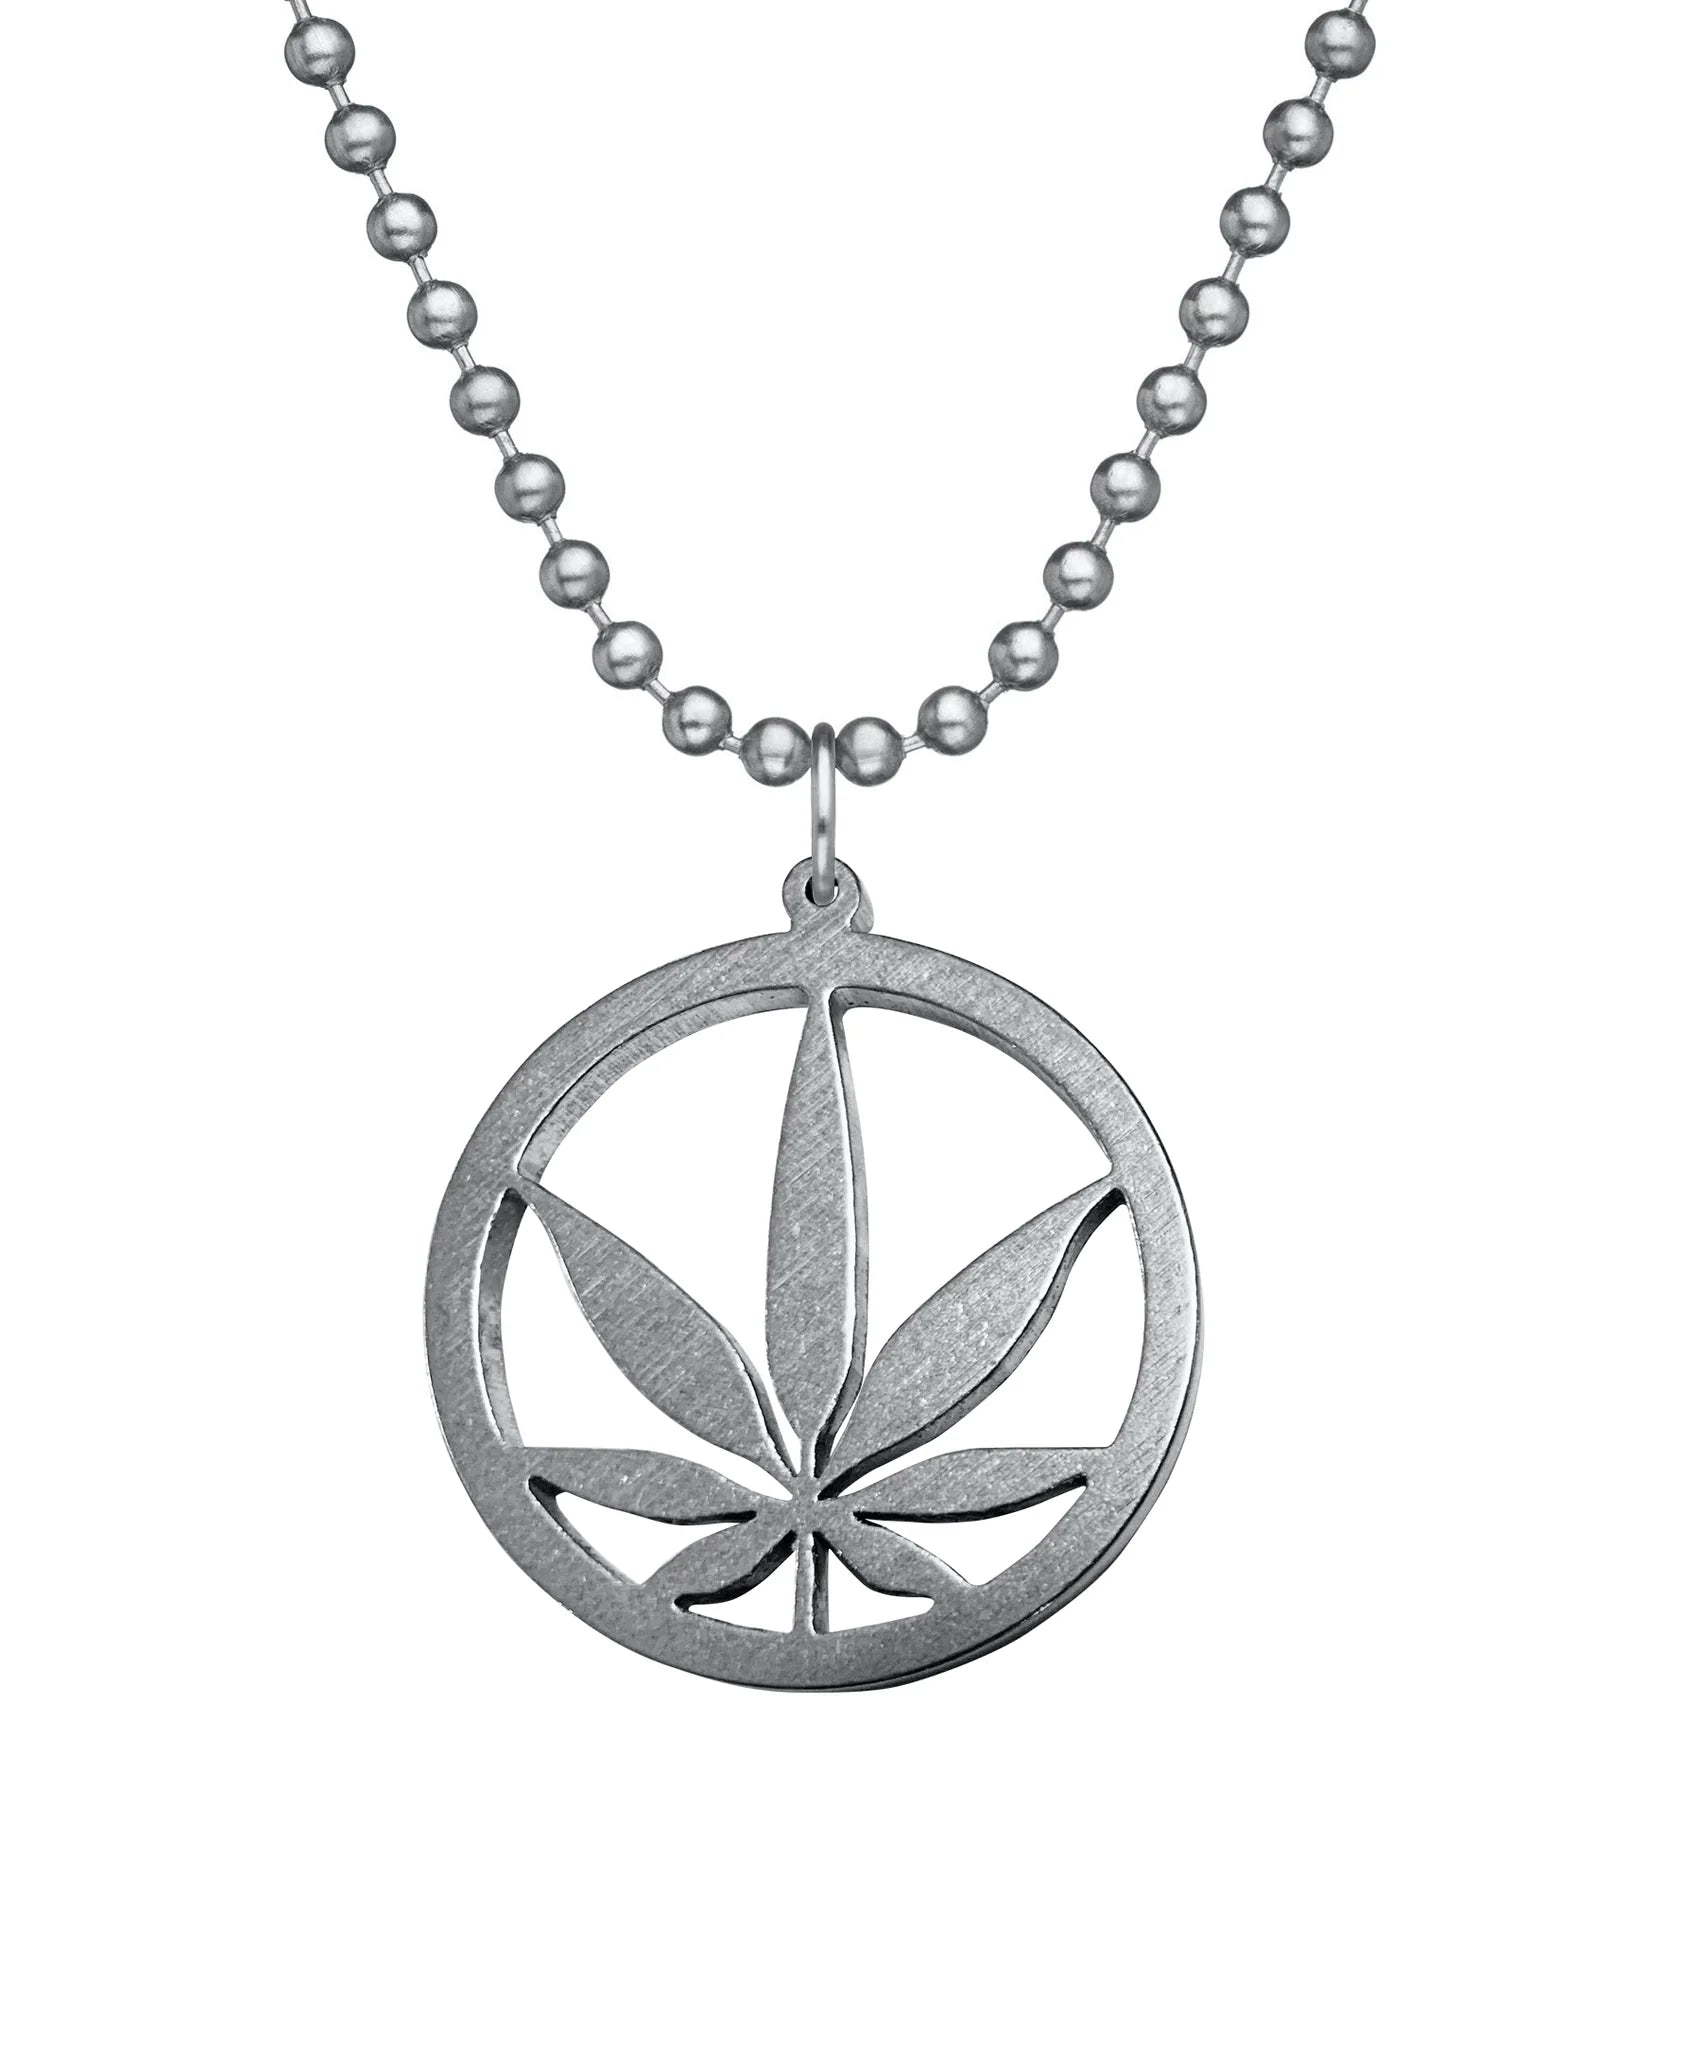 420 Marijuana Leaf Necklace with Dog Tag Chain